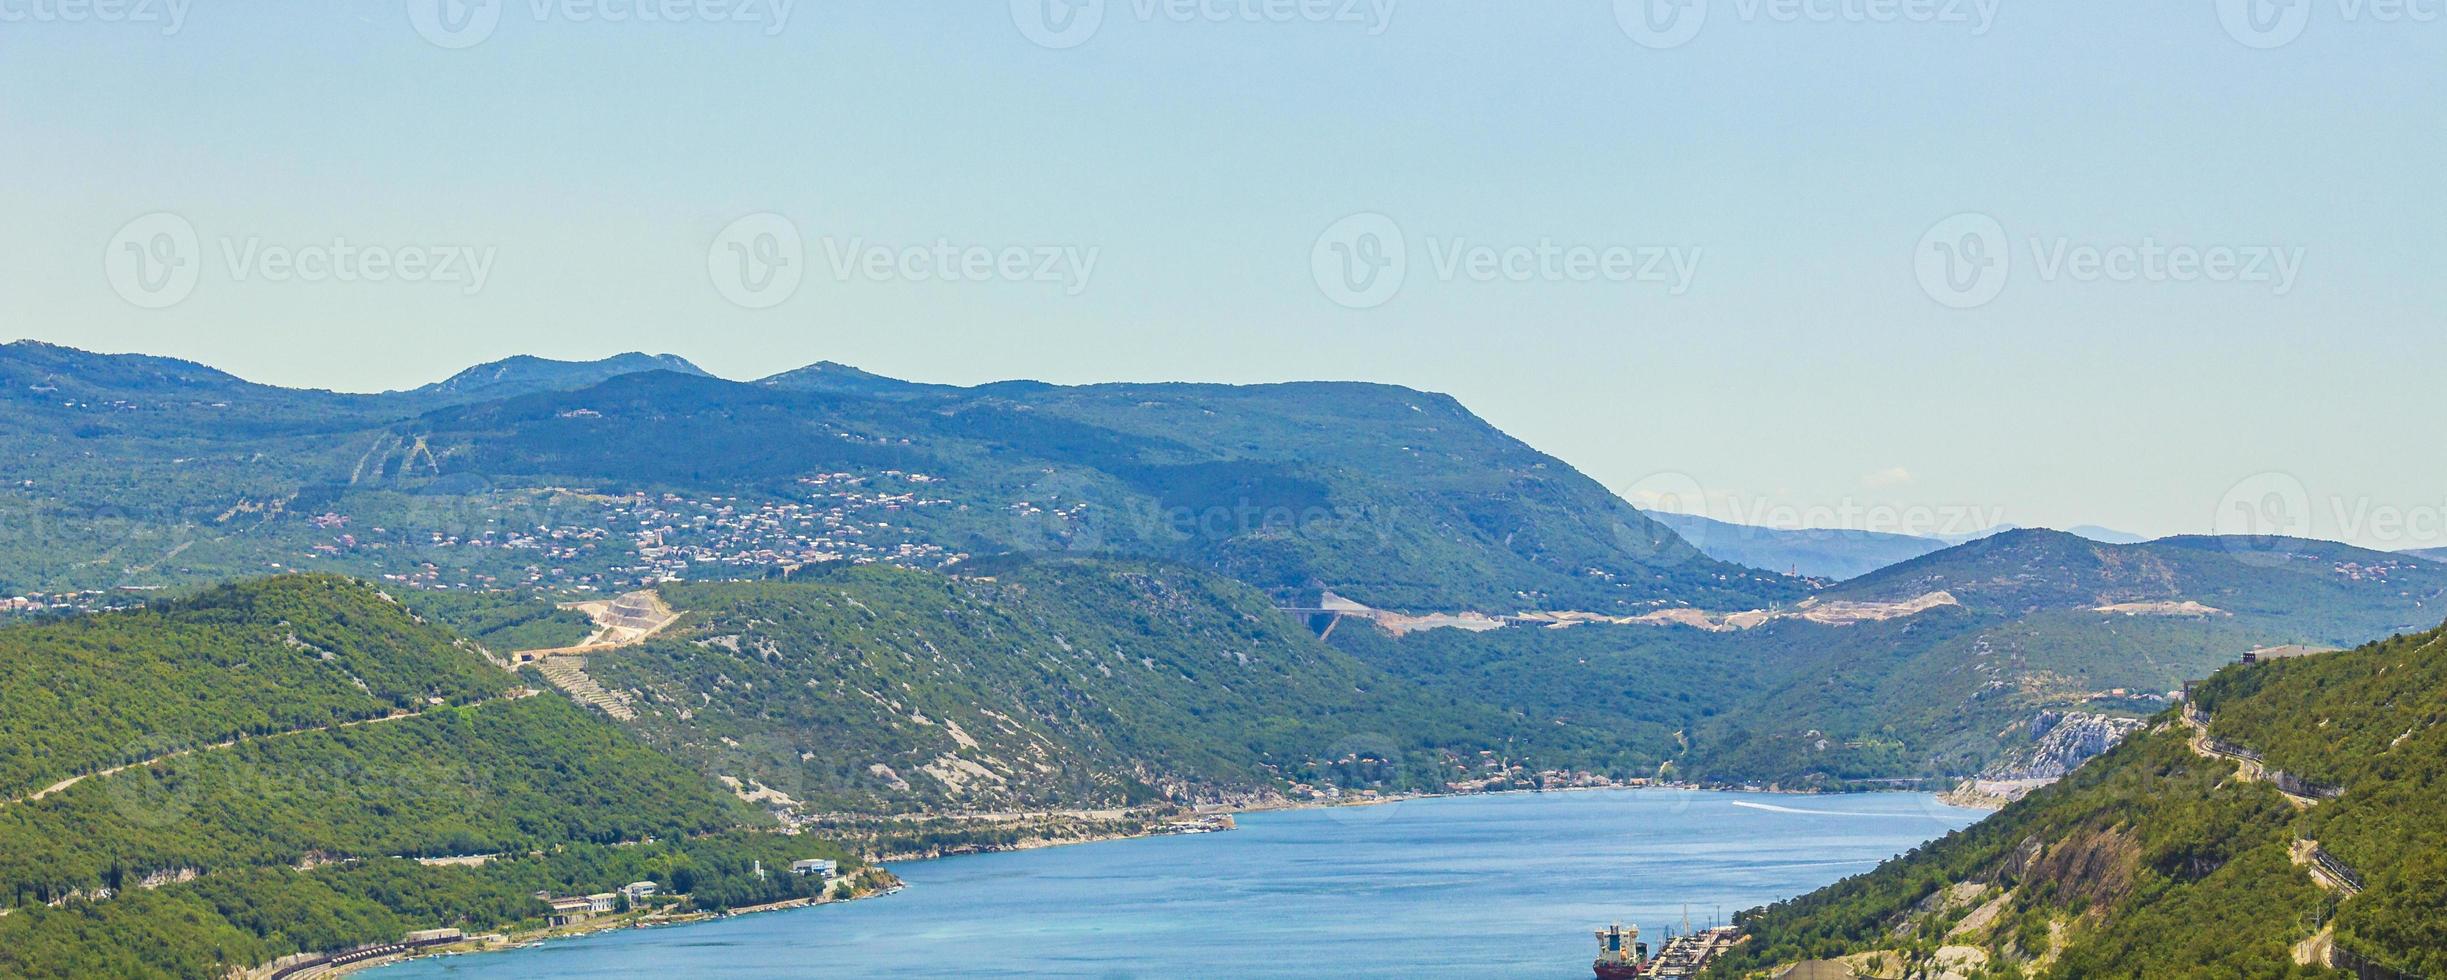 den blå bukten och hamnen i bakarski zaliv bakar kroatien. foto